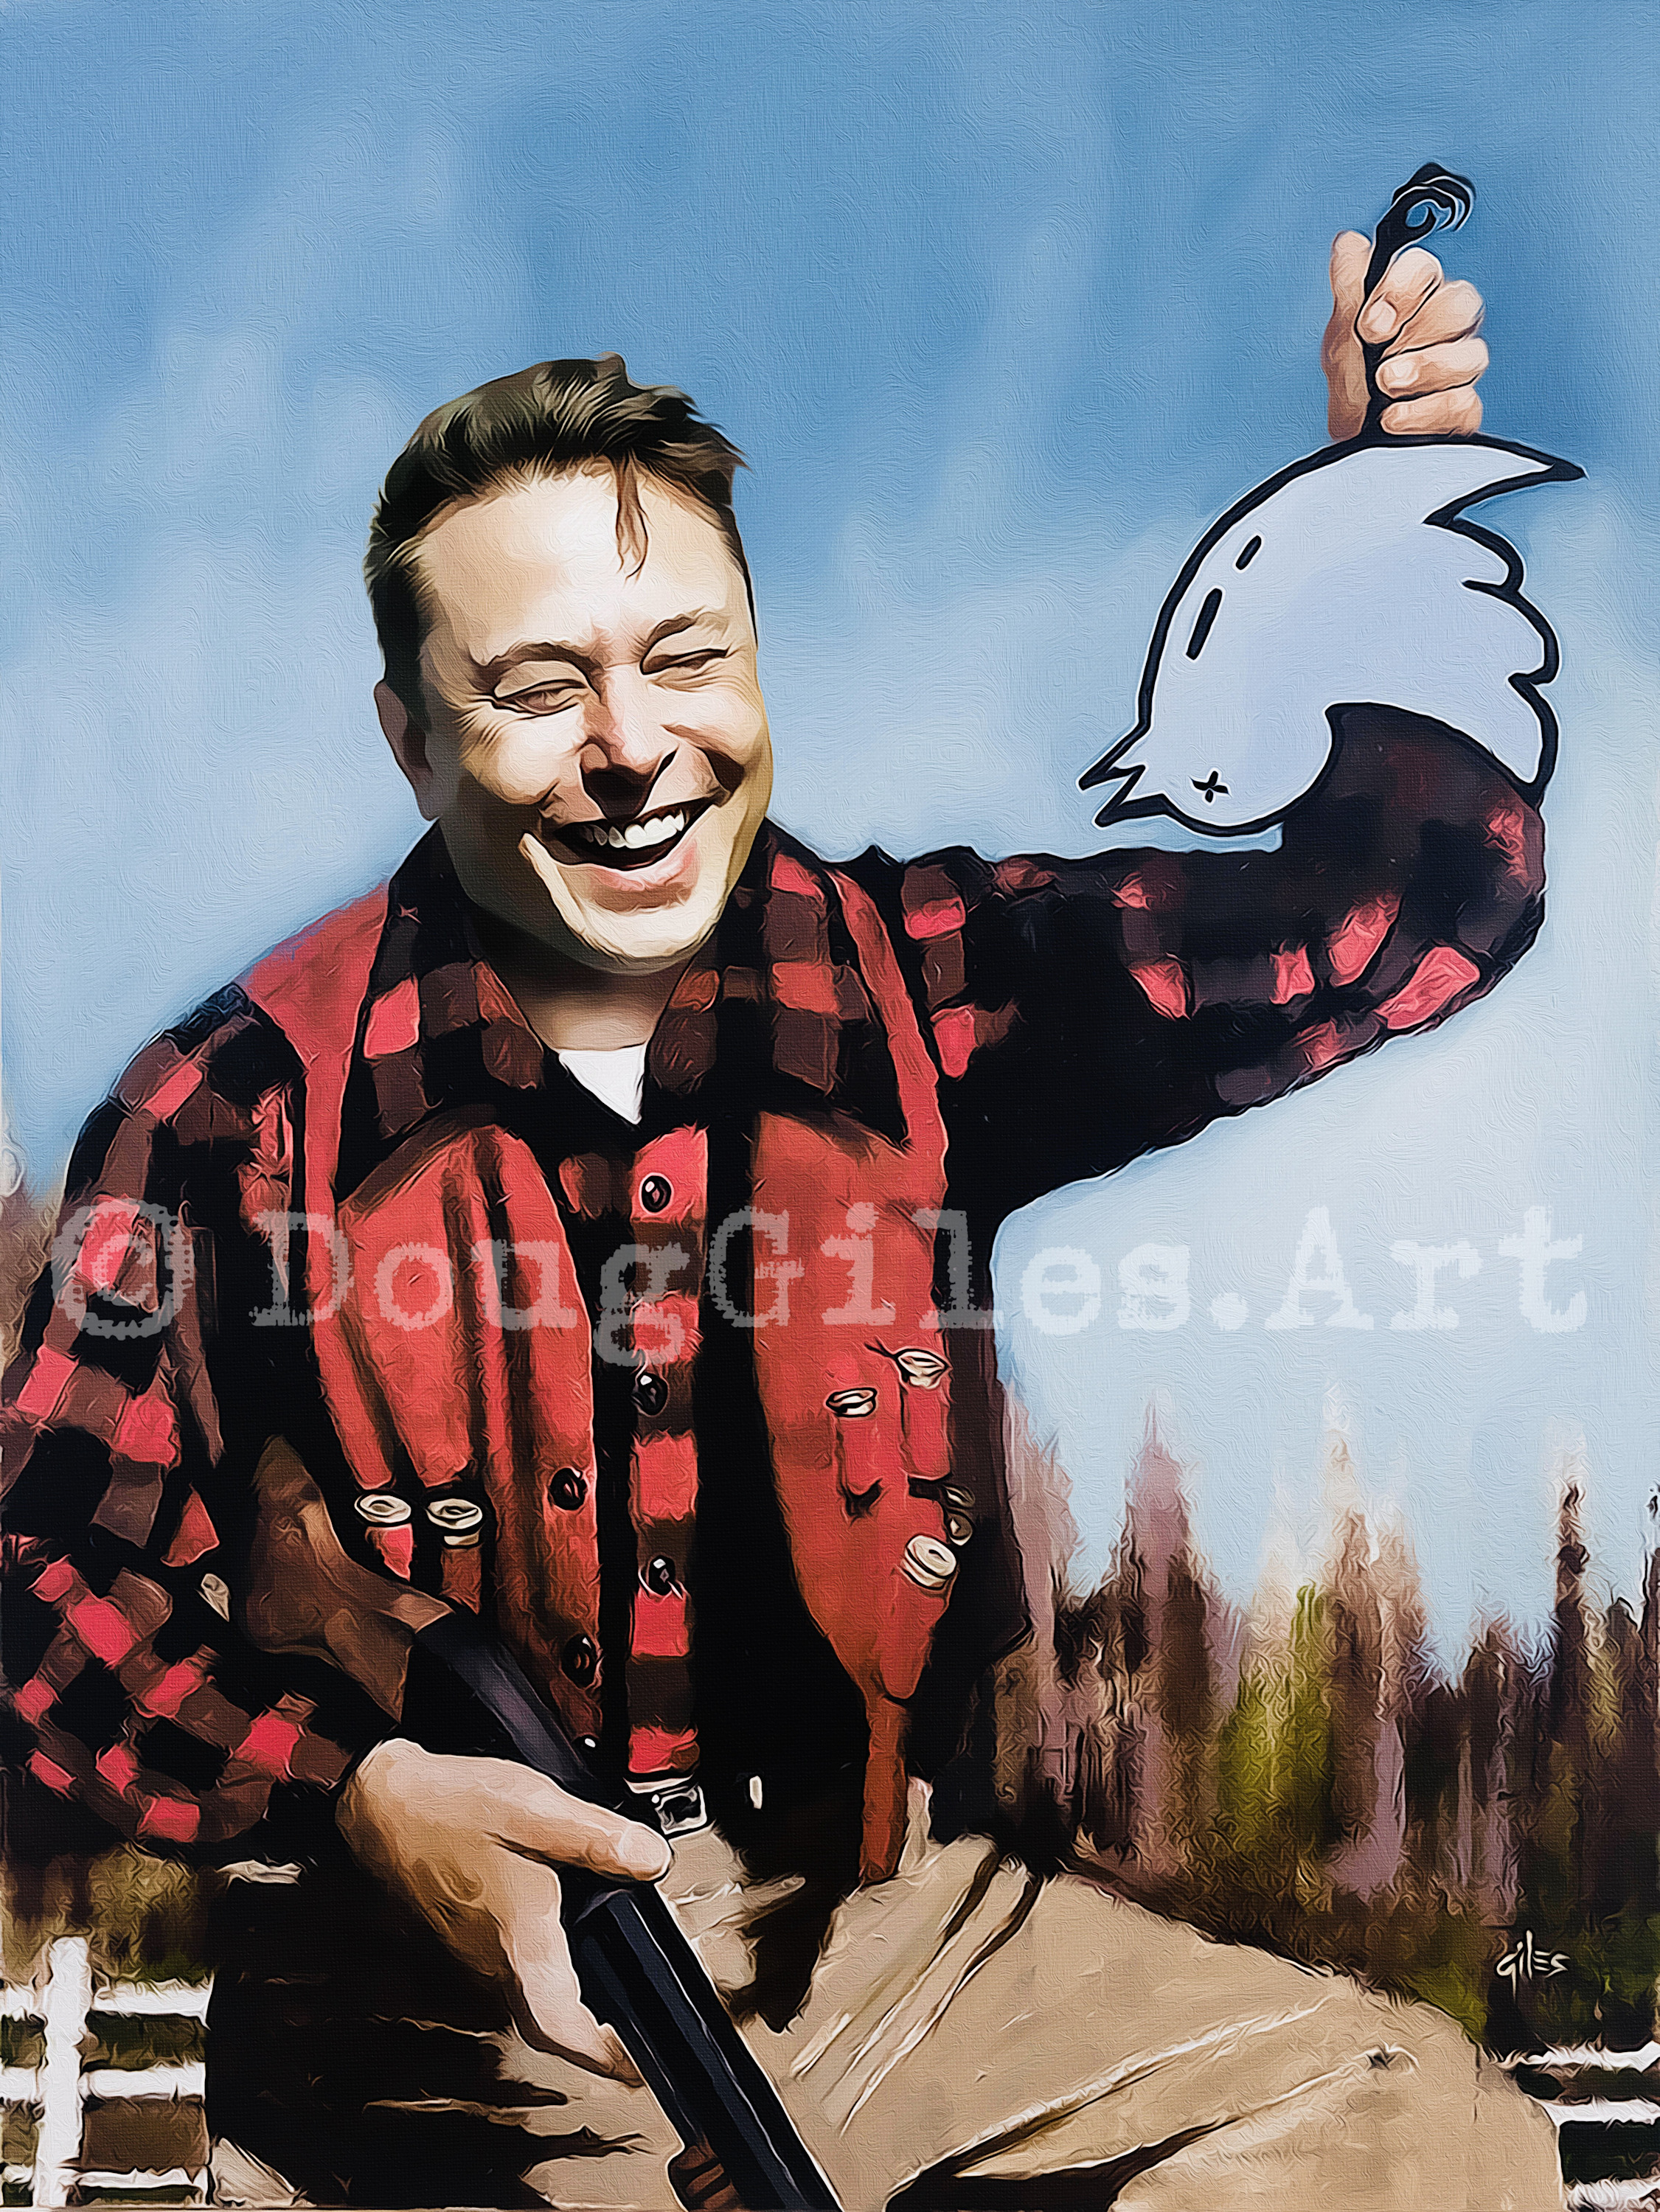 Elon smoked the old twitter bird le ywoycw